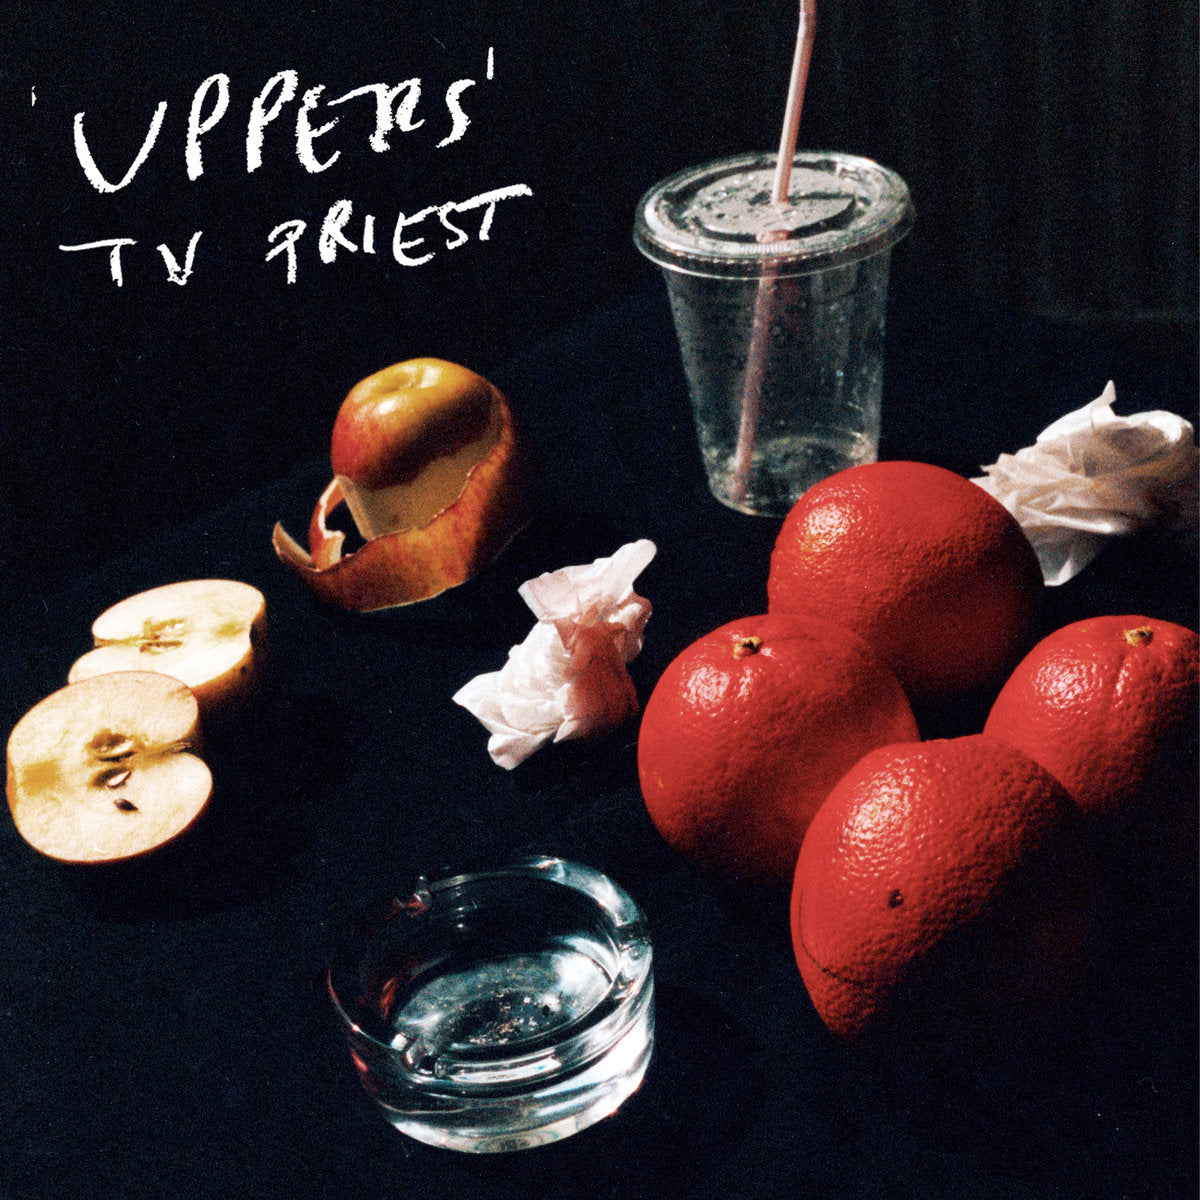 TV PRIEST - Uppers - LP - Vinyl